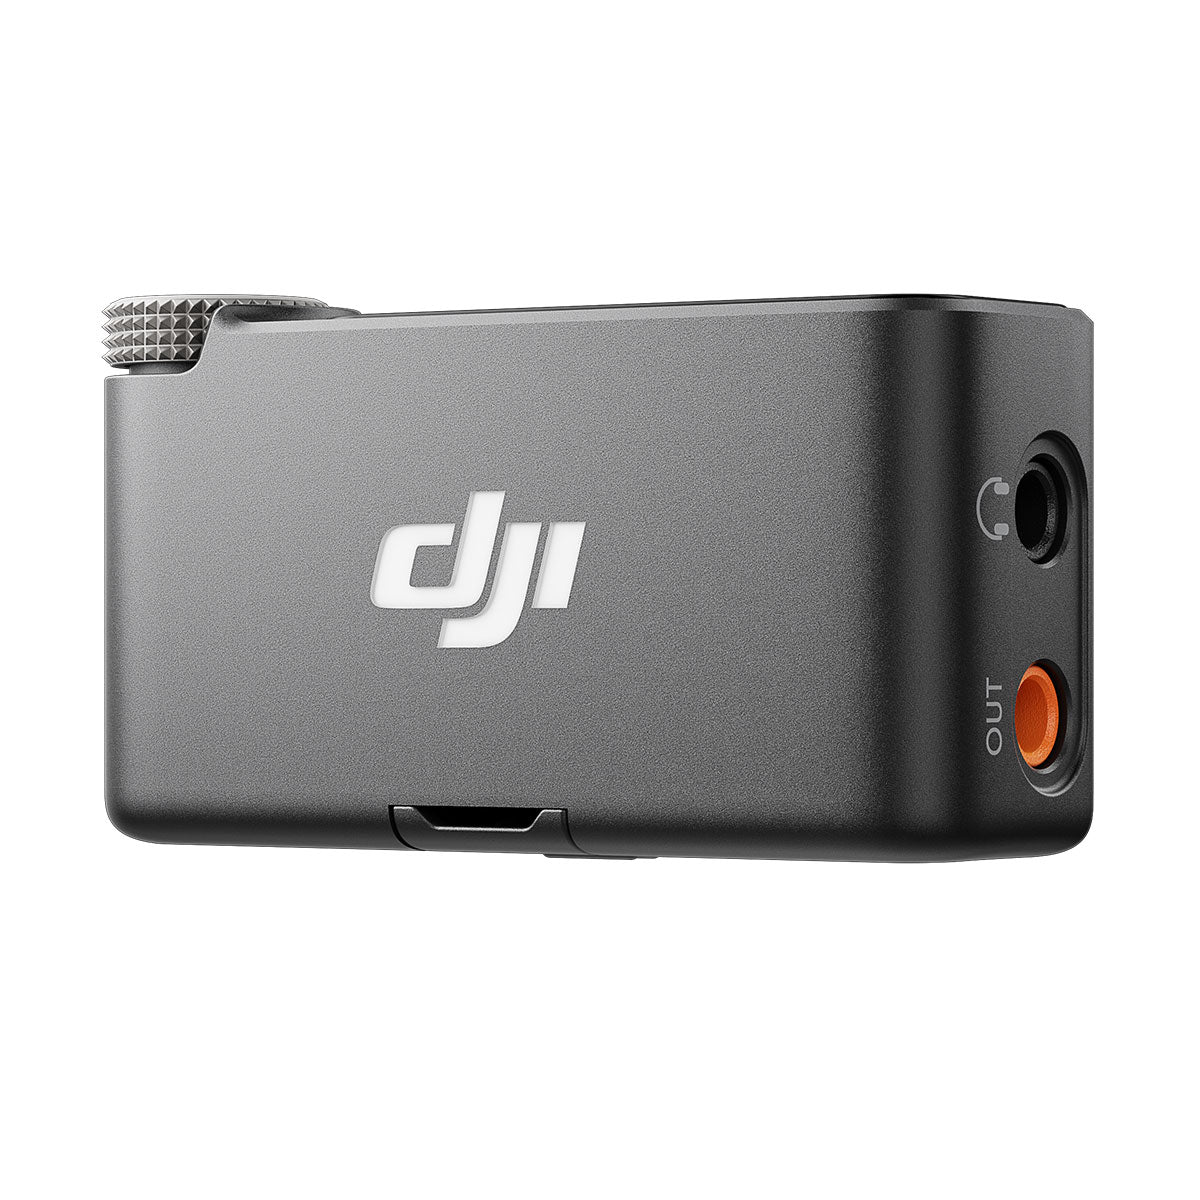 DJI Mic 2 adds 32-bit float internal recording